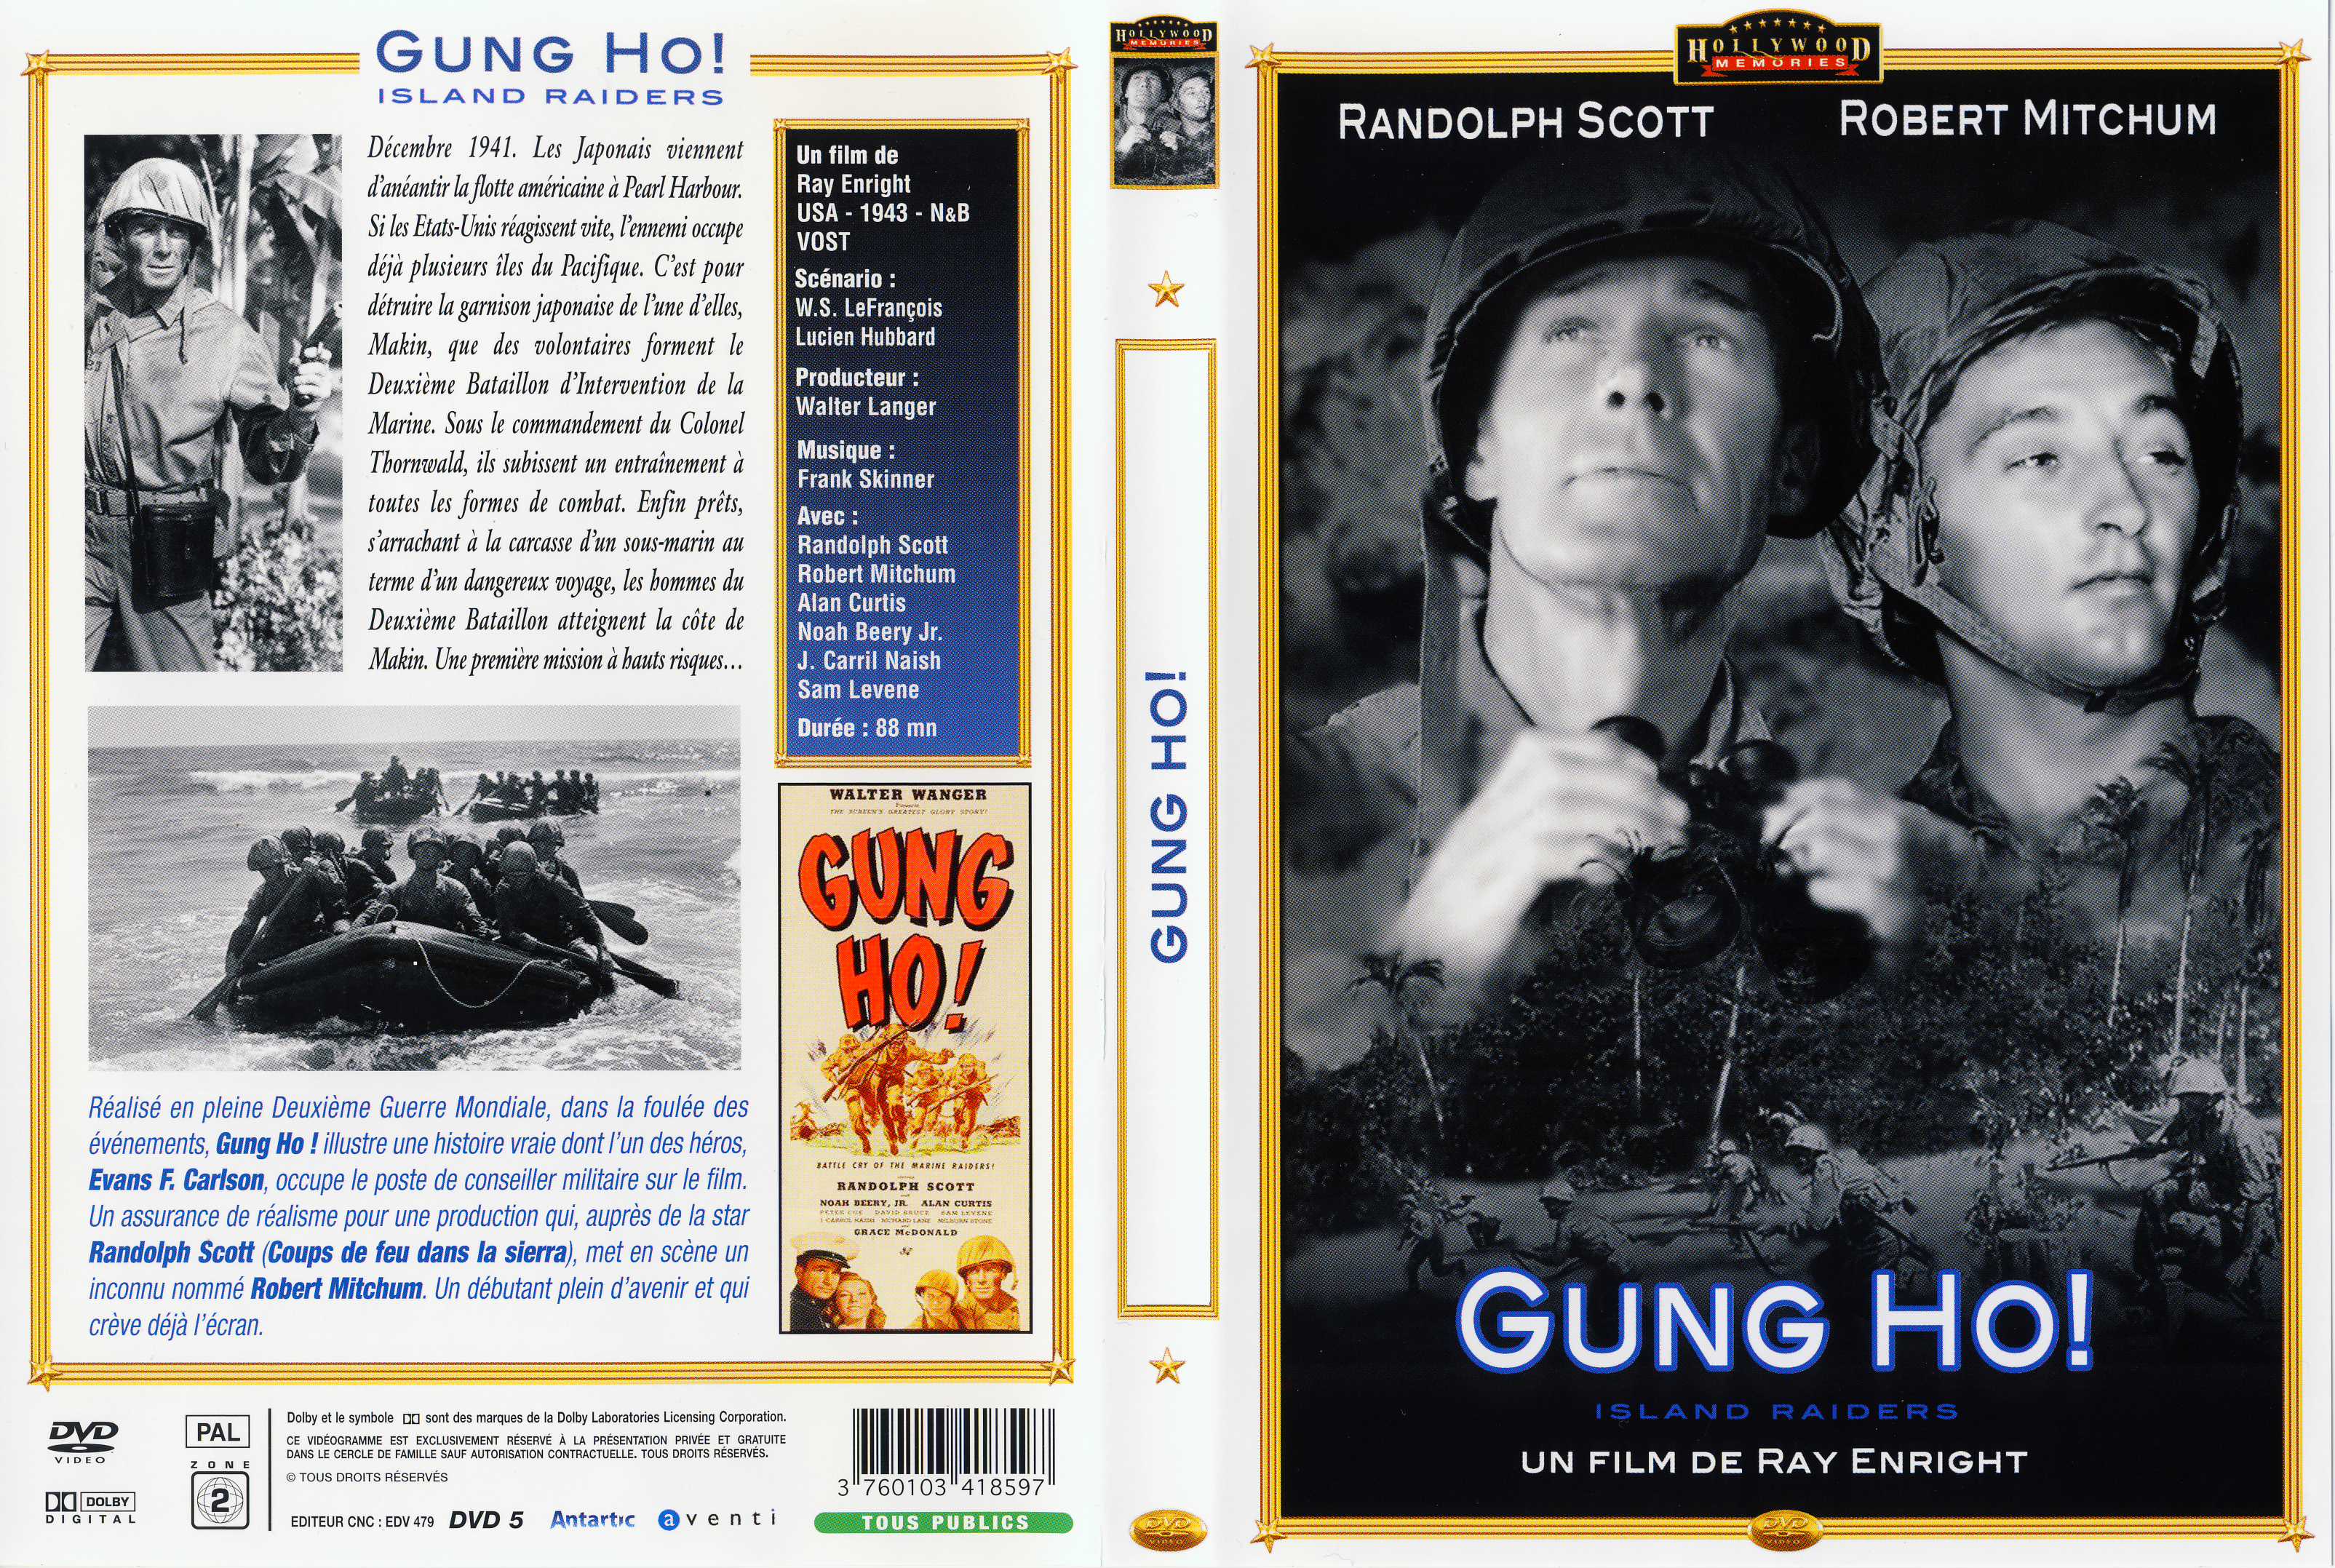 Jaquette DVD Gung Ho (1943) v2